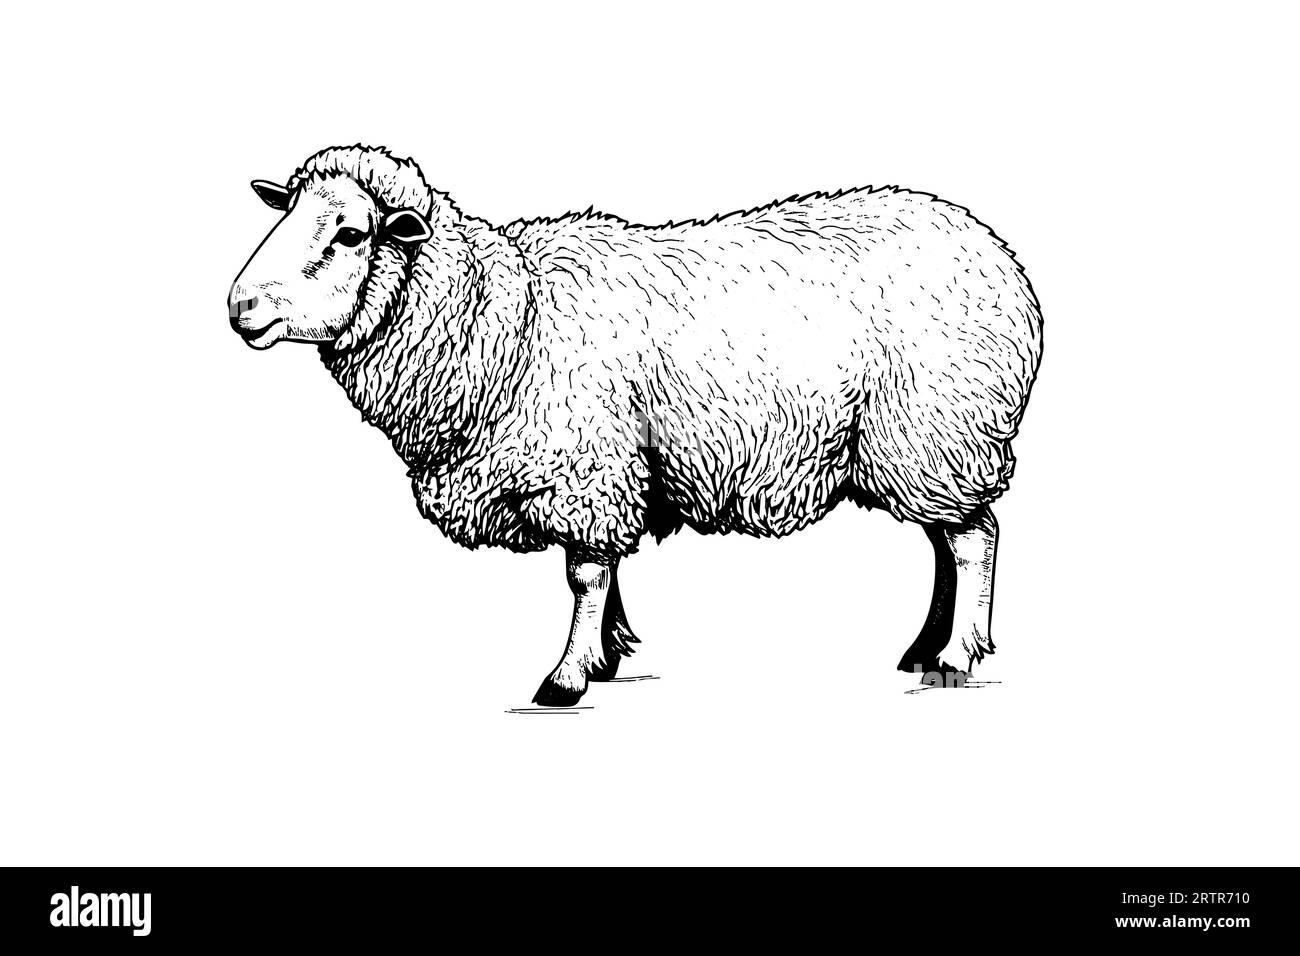 Bev Johnson | 🐑 🌱 #art #lambs #sheep #drawing #sketch #drawingforfun |  Instagram